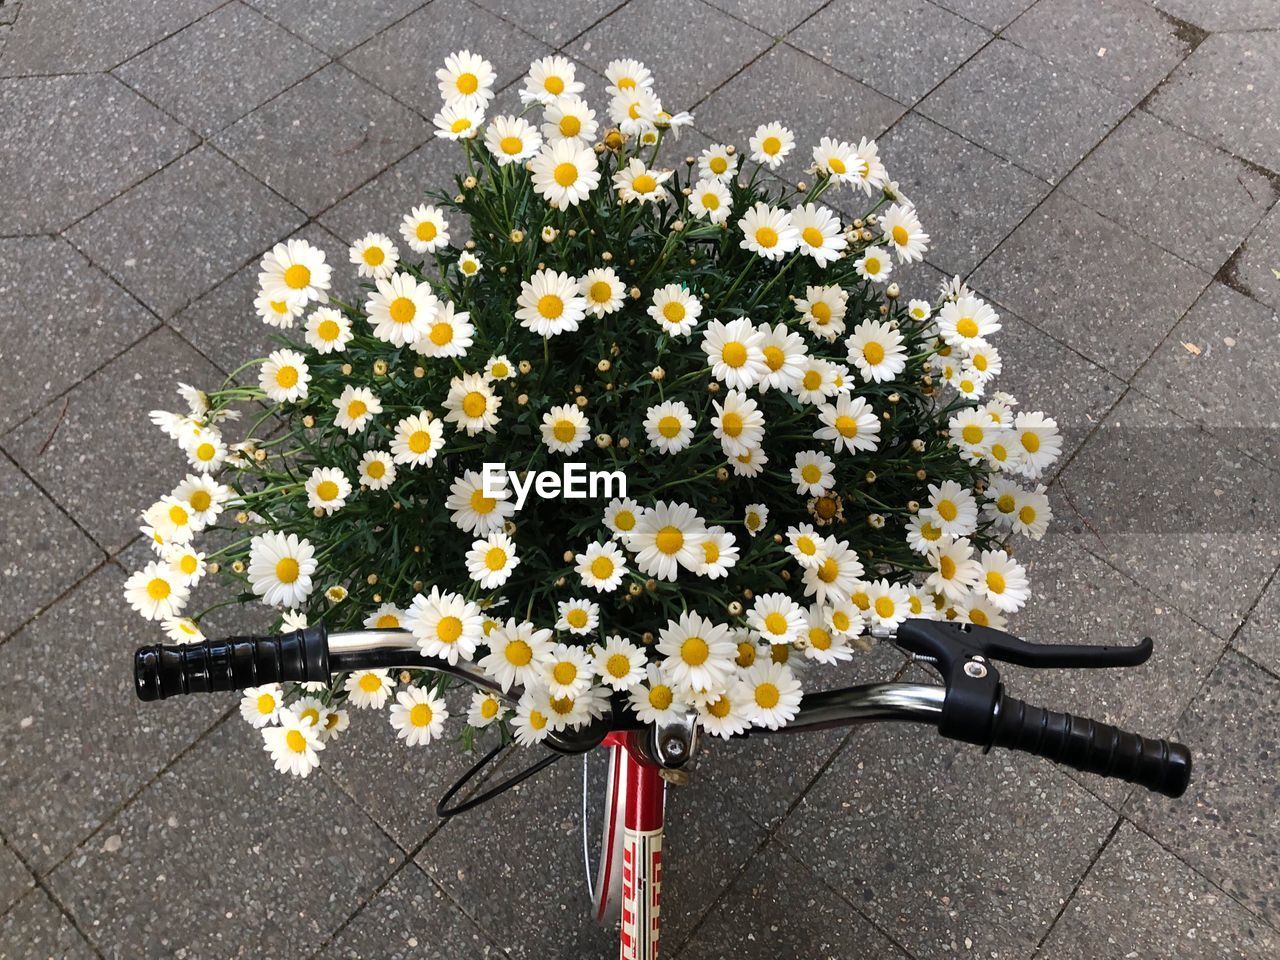 Flowers in bicycle basket